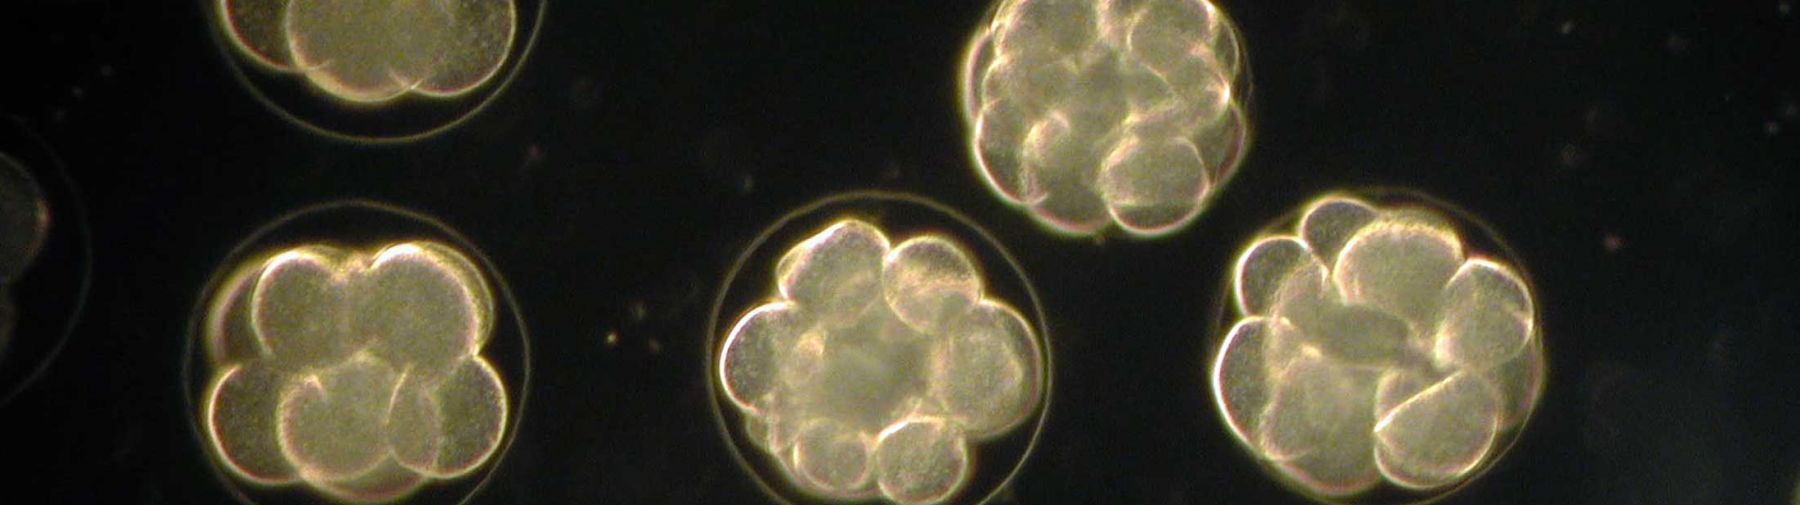 Sea Urchin Embryos